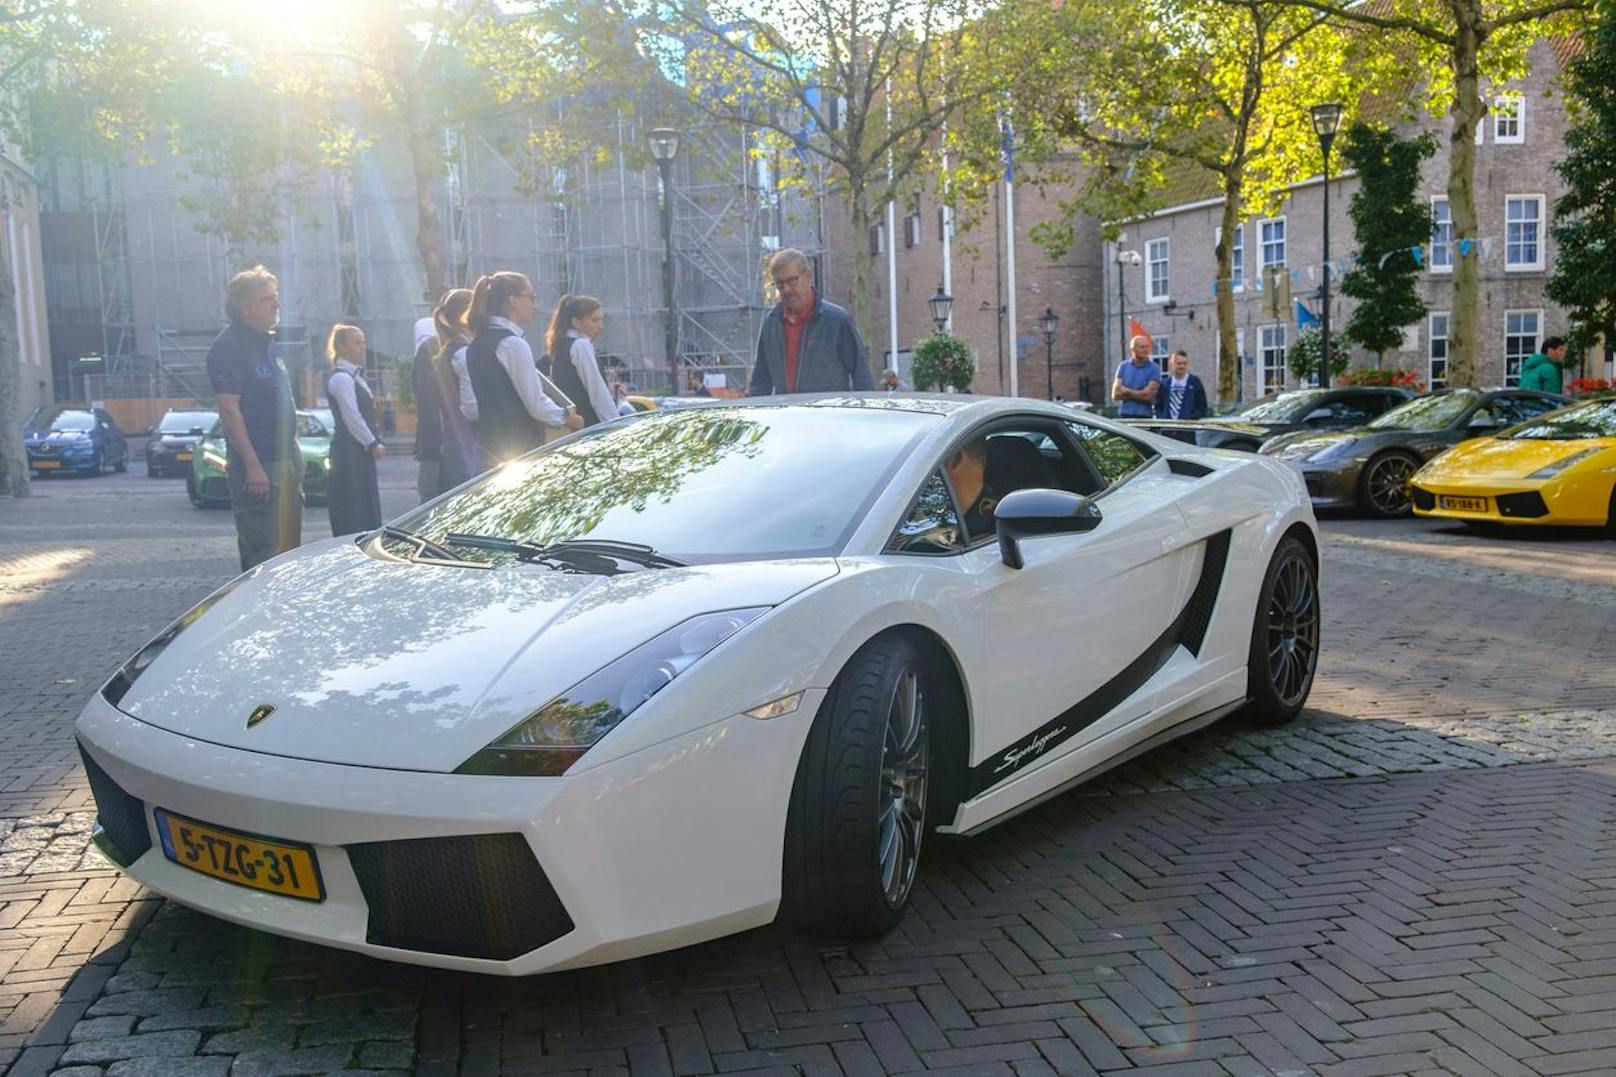 Hochzeitskorso mit Lamborghini legt Autobahn lahm